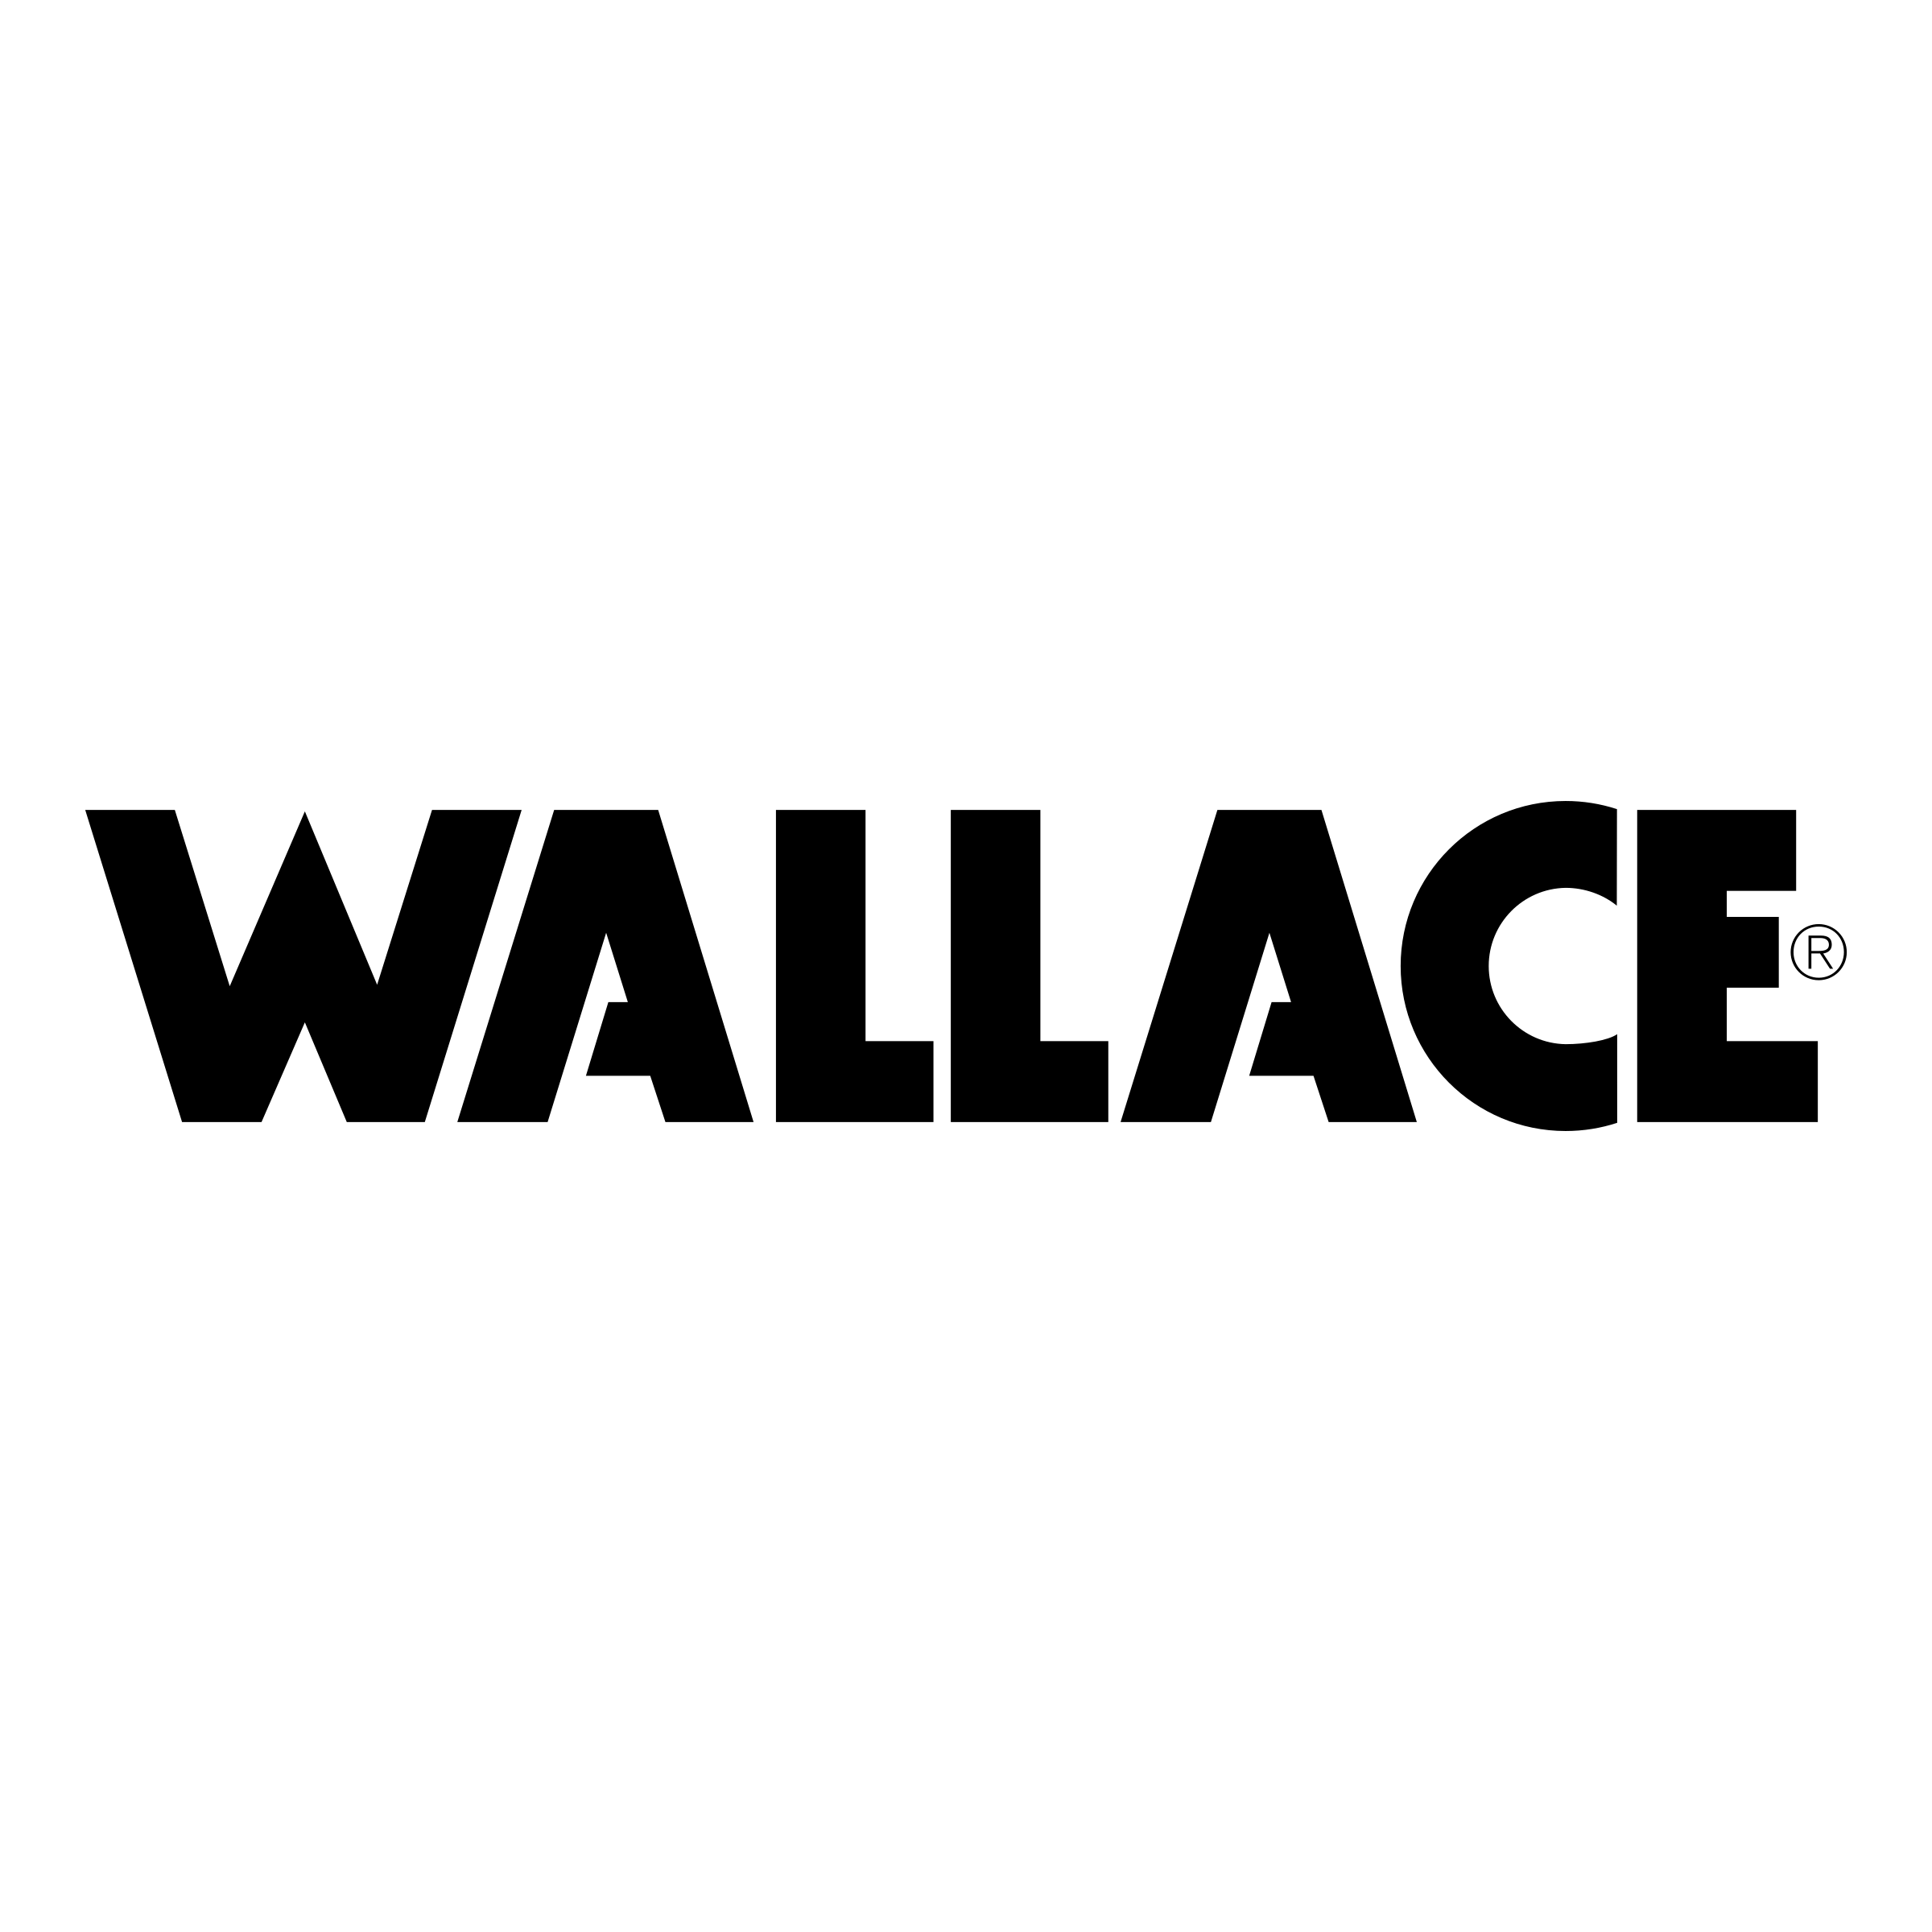 Wallace Logo - Wallace Logo PNG Transparent & SVG Vector